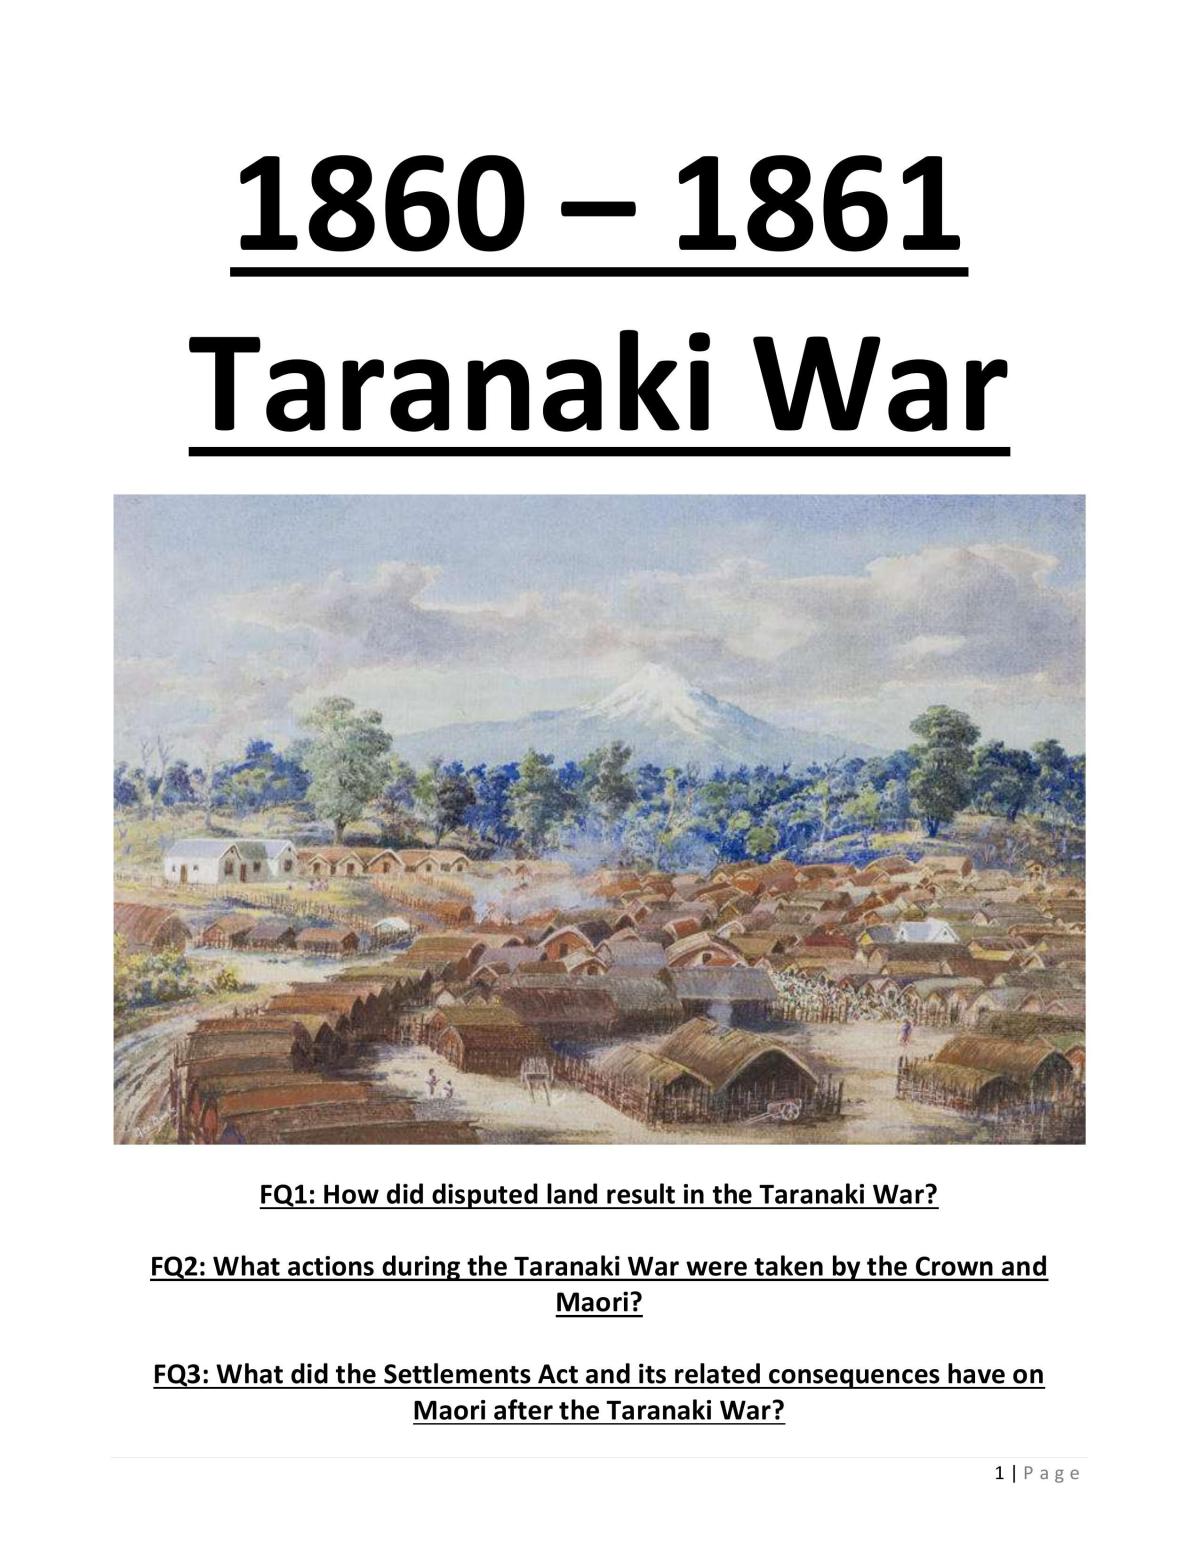 History 3. 1 - Taranaki War - Page 1